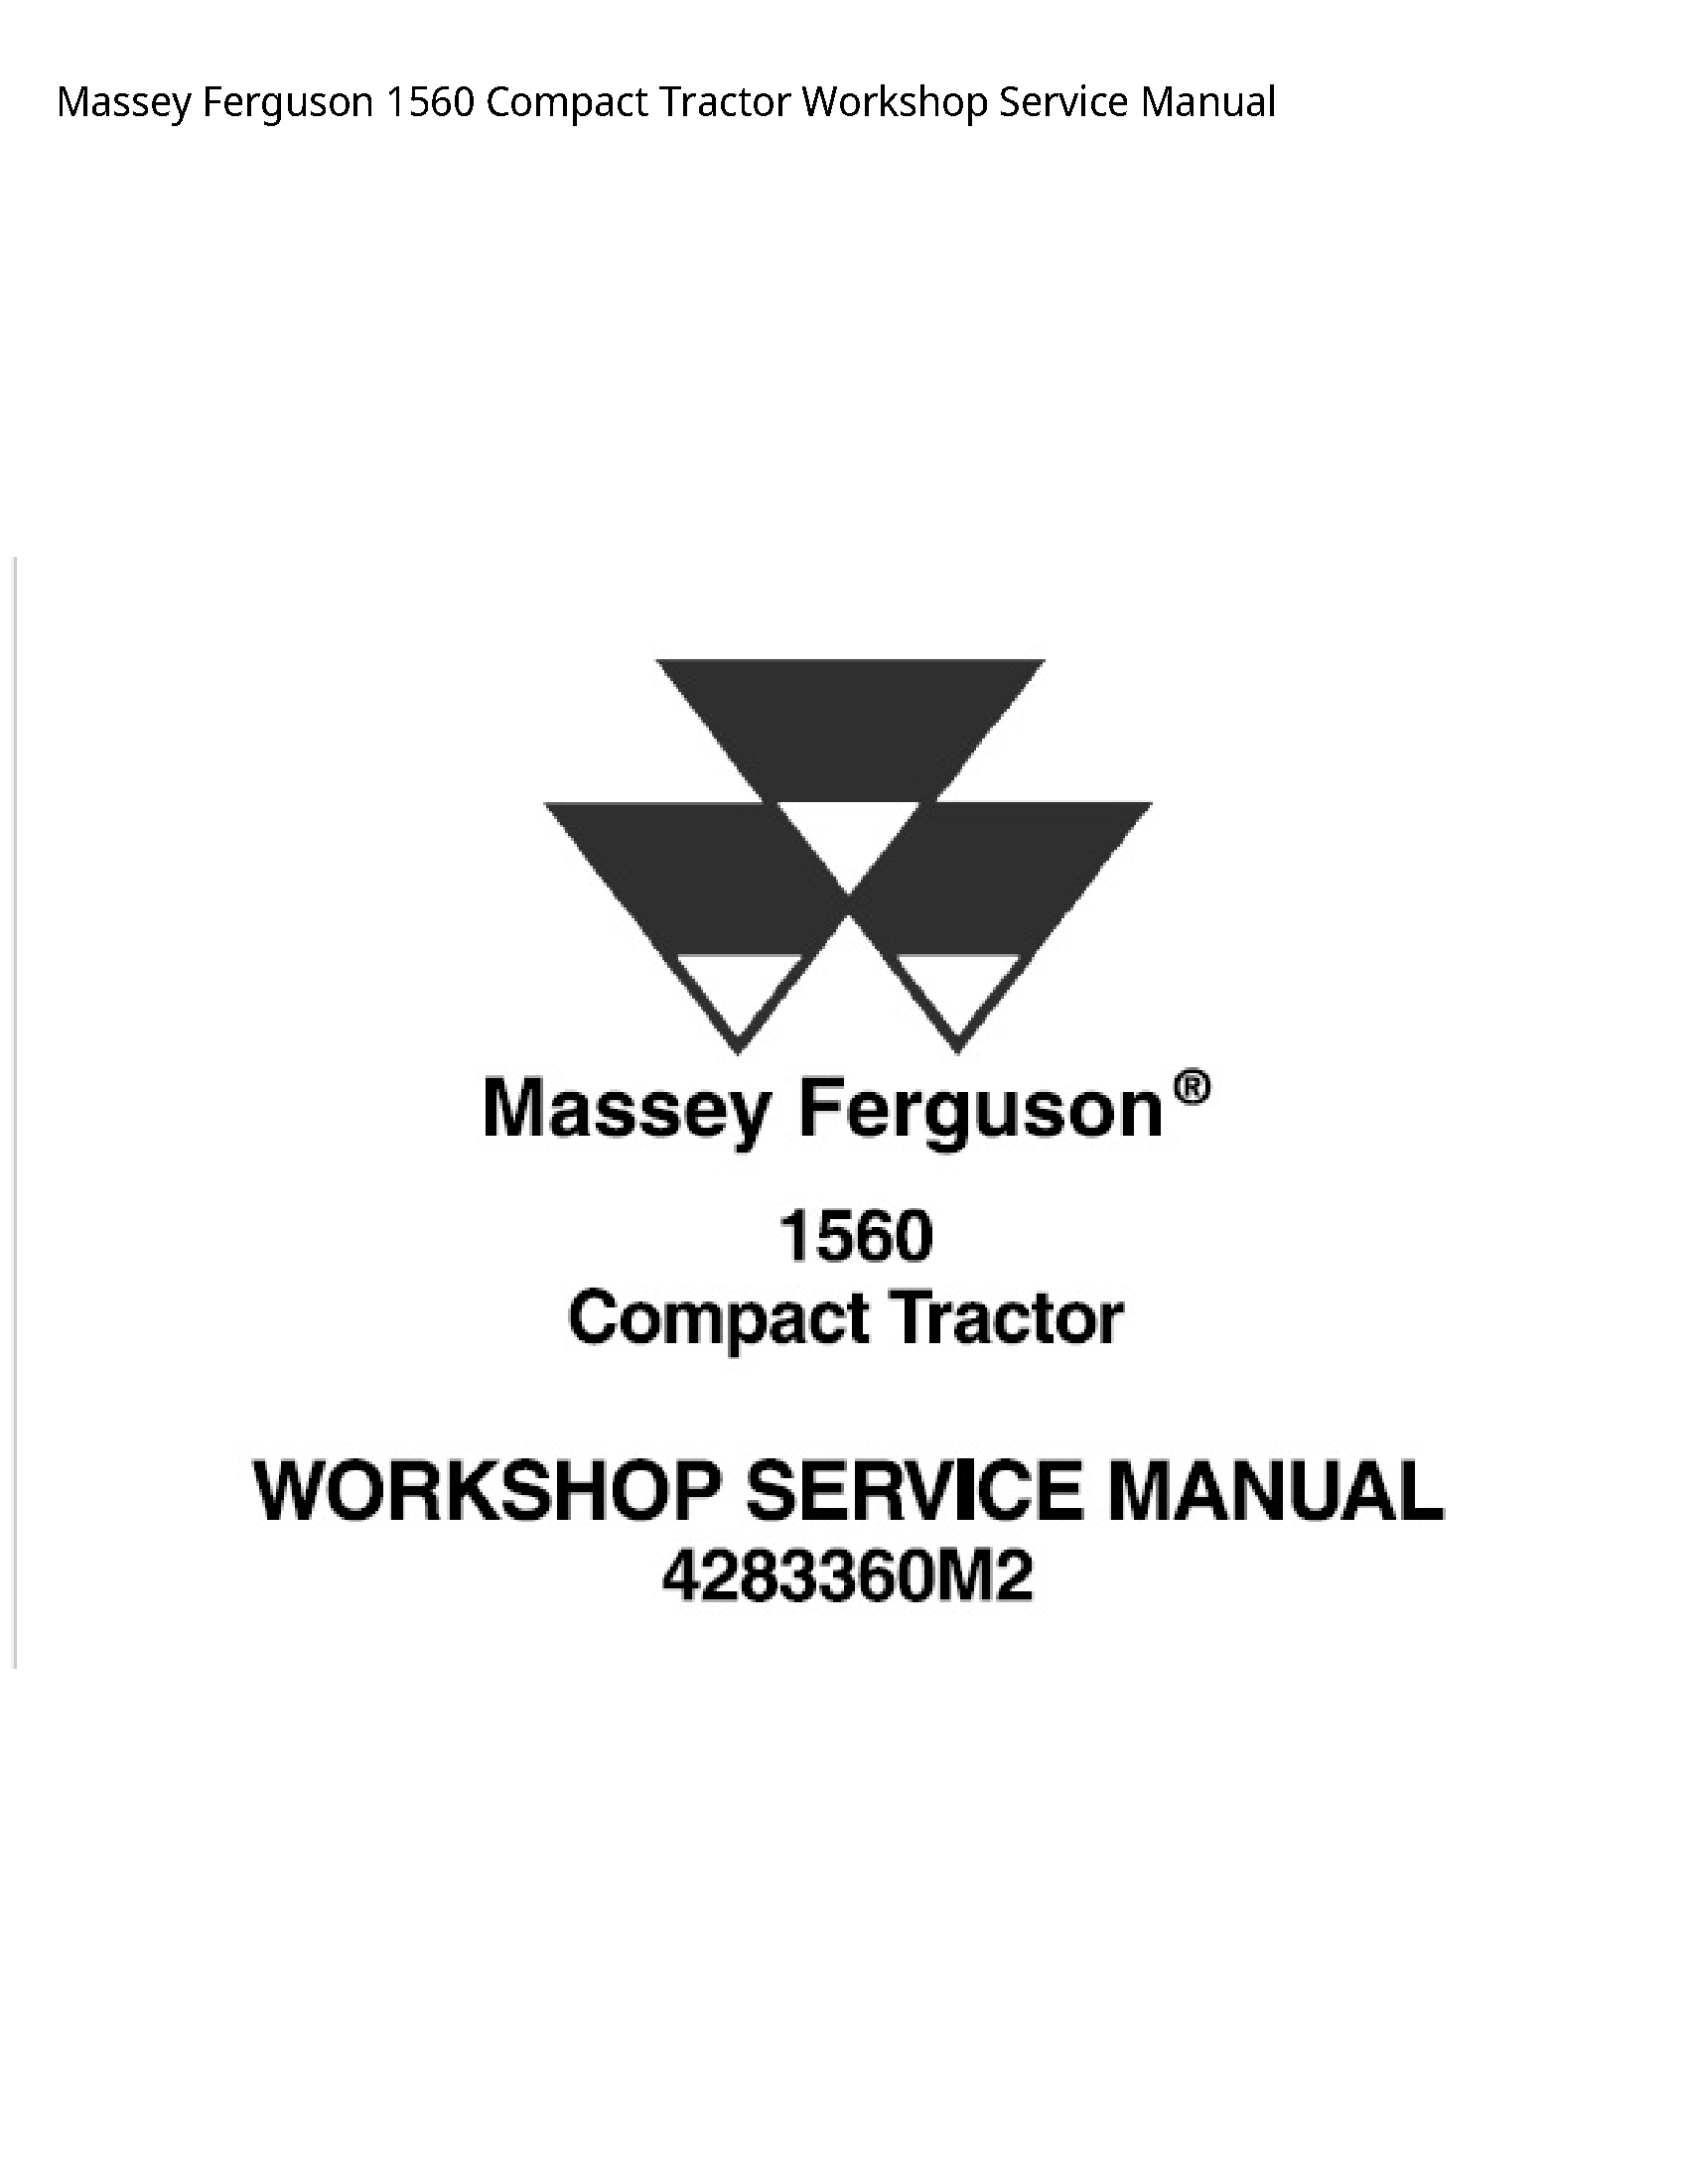 Massey Ferguson 1560 Compact Tractor Service manual